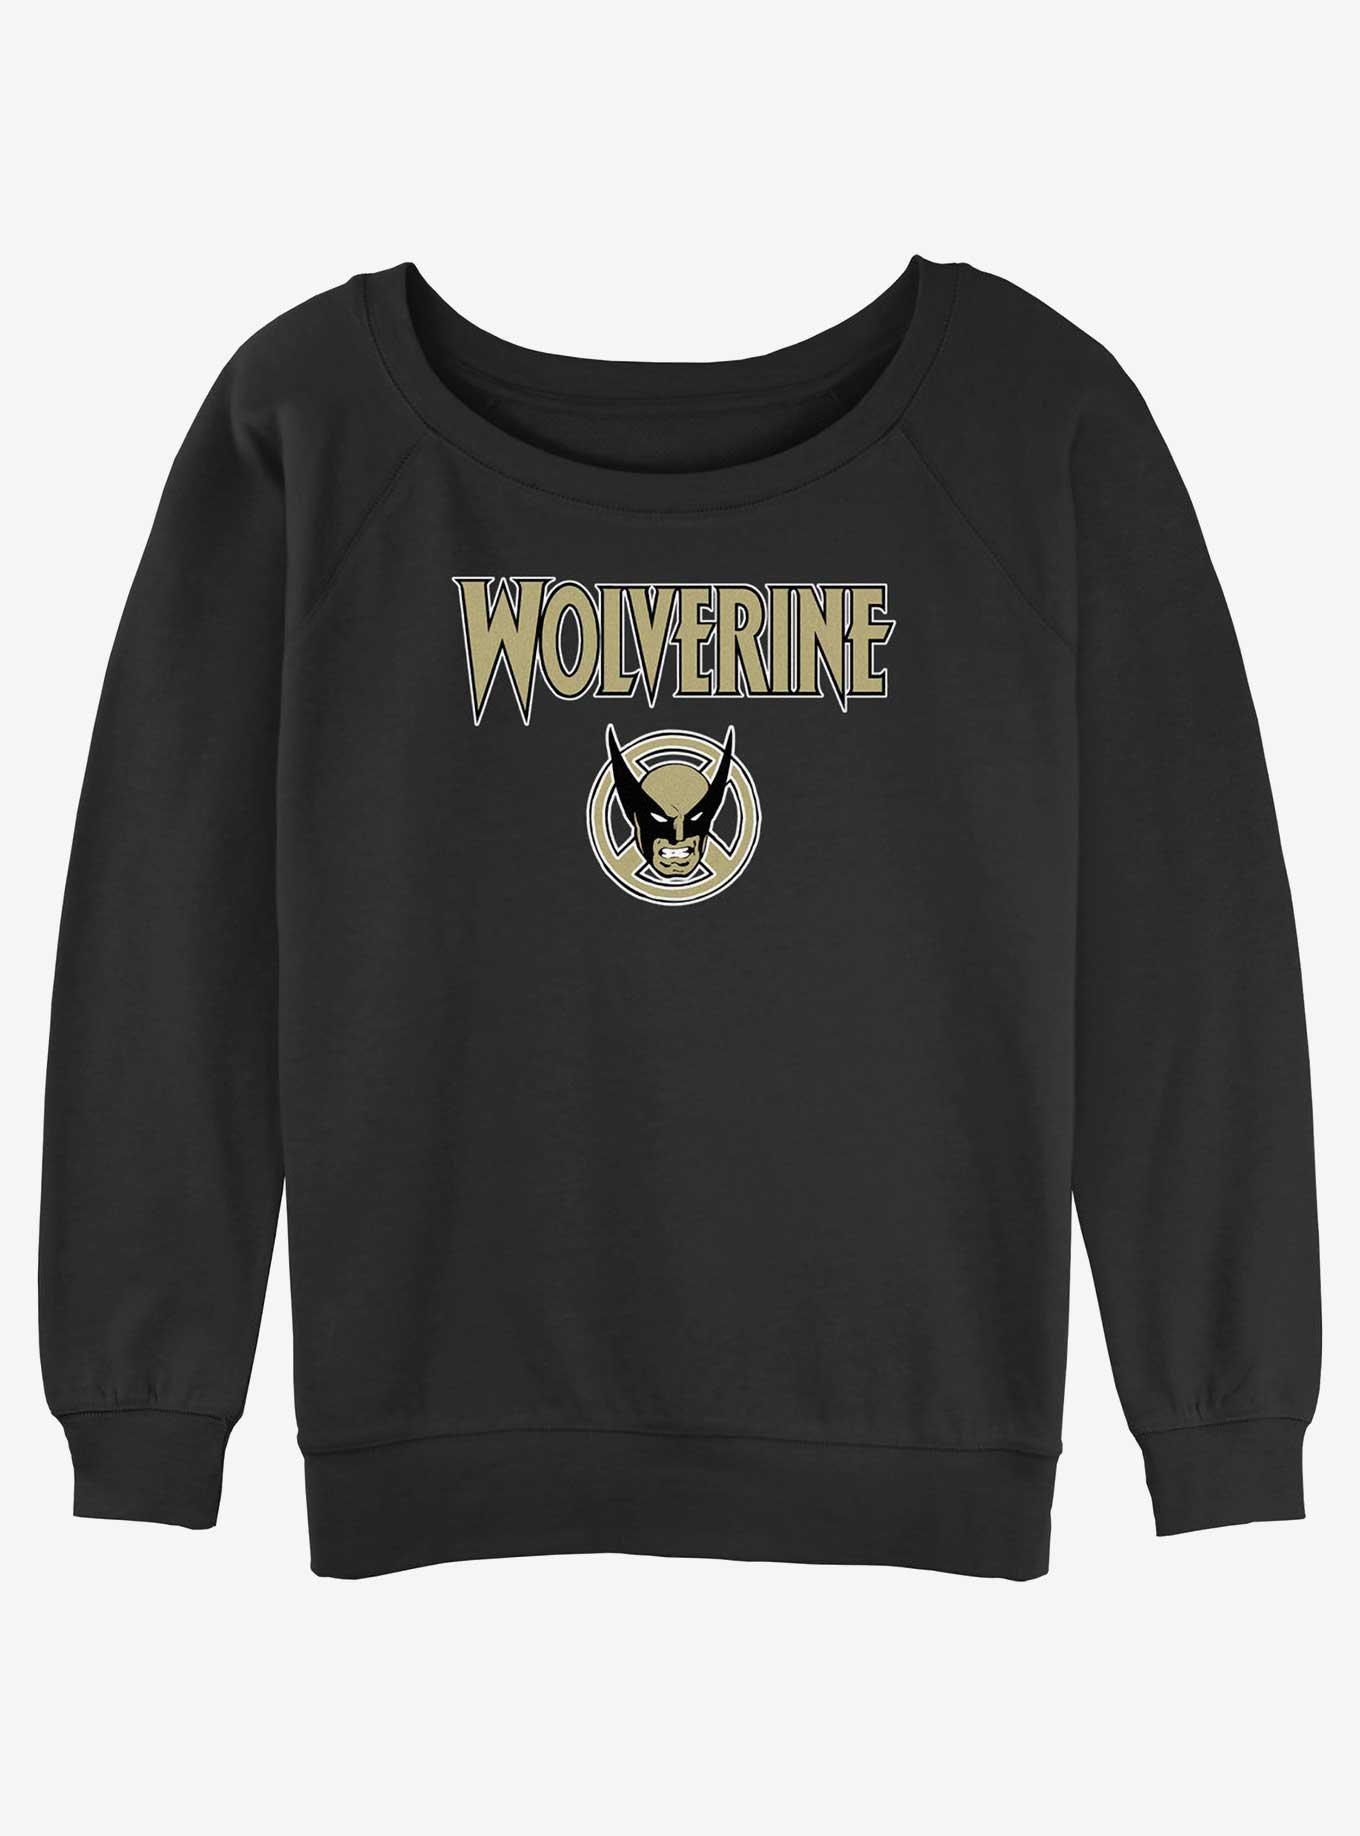 Wolverine Logan Icon Womens Slouchy Sweatshirt, BLACK, hi-res